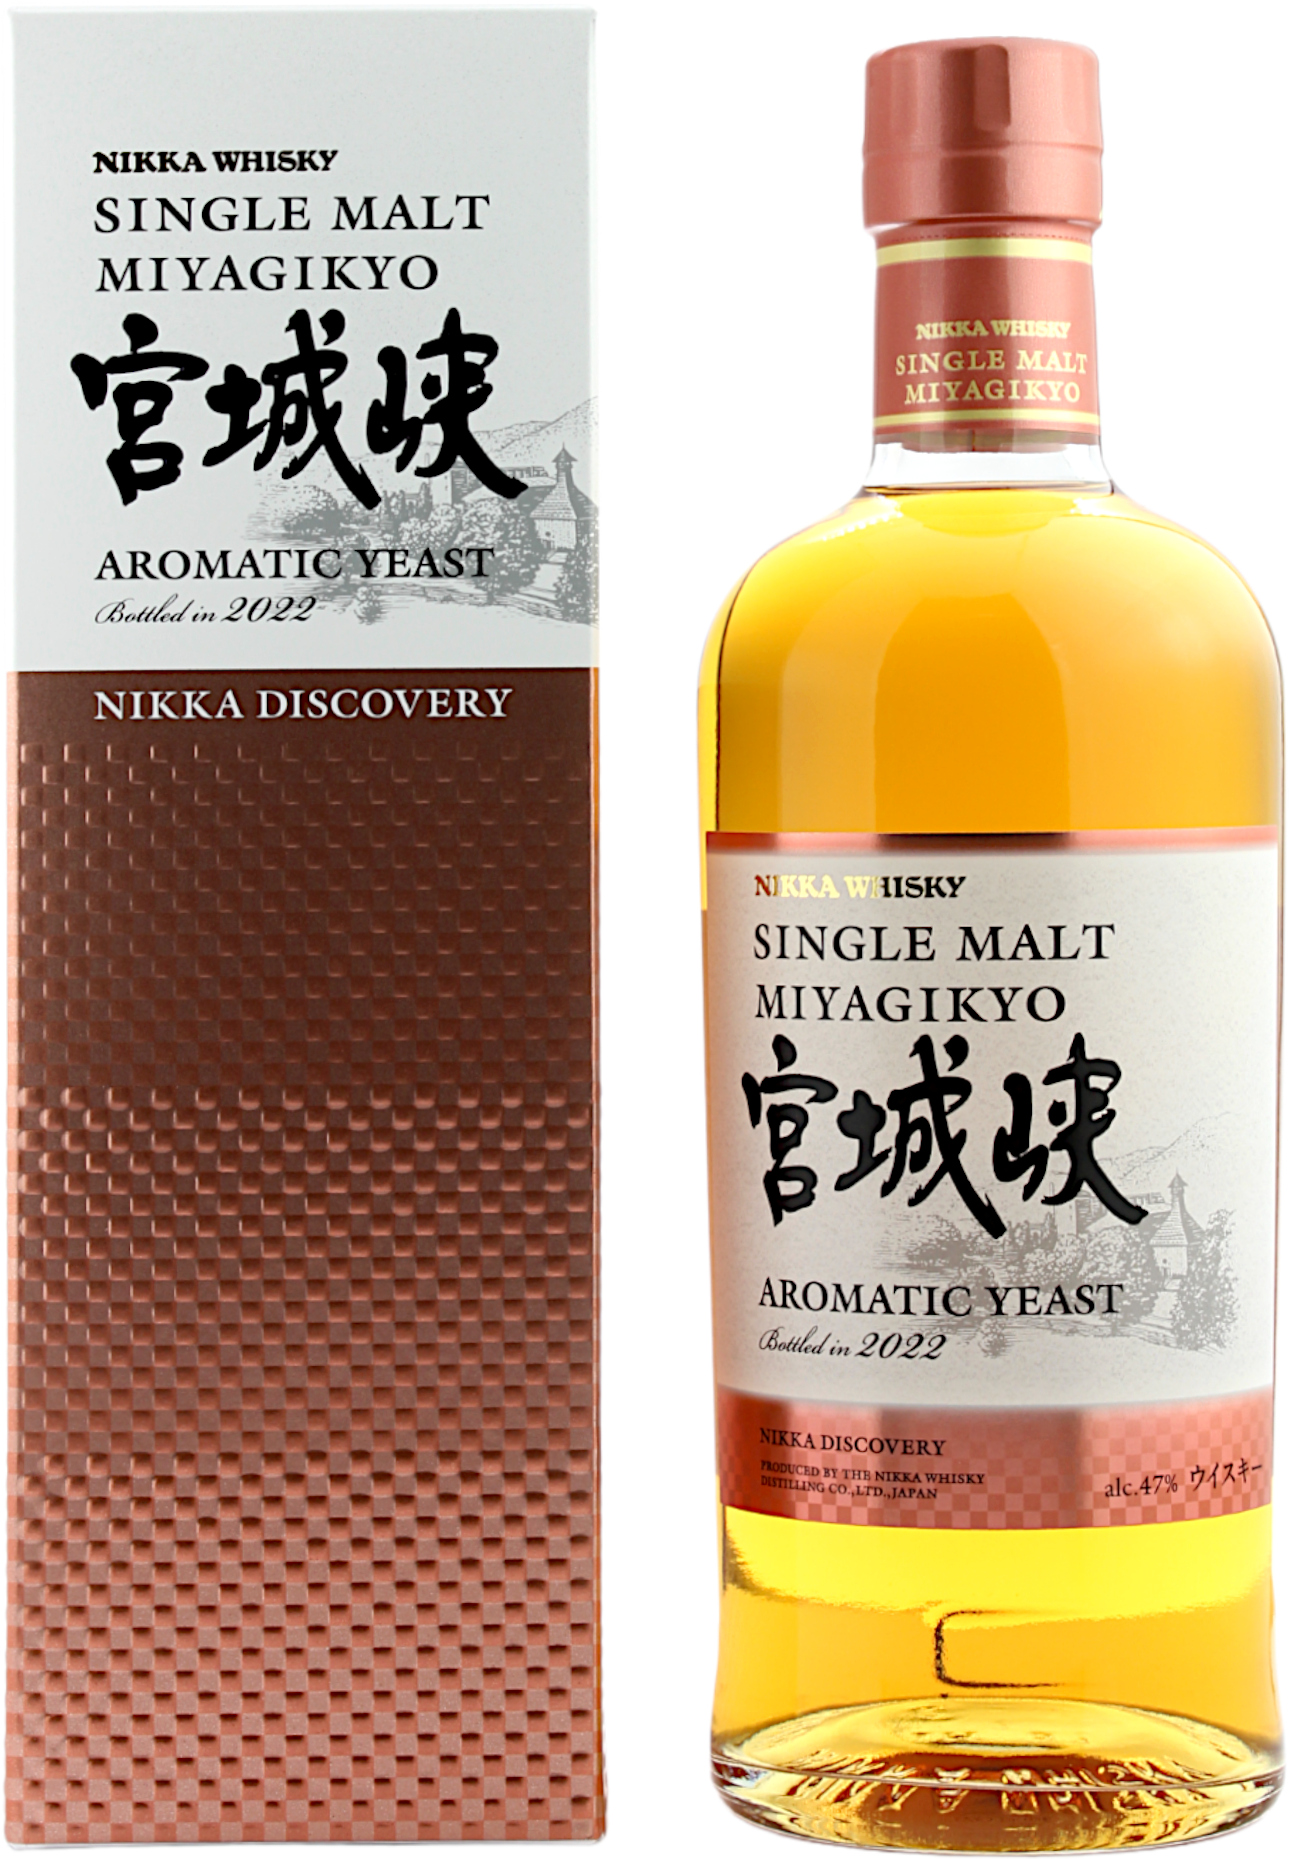 Nikka Miyagikyo Discovery Aromatic Yeast 2022 (Japan) 47.0% 0,7l